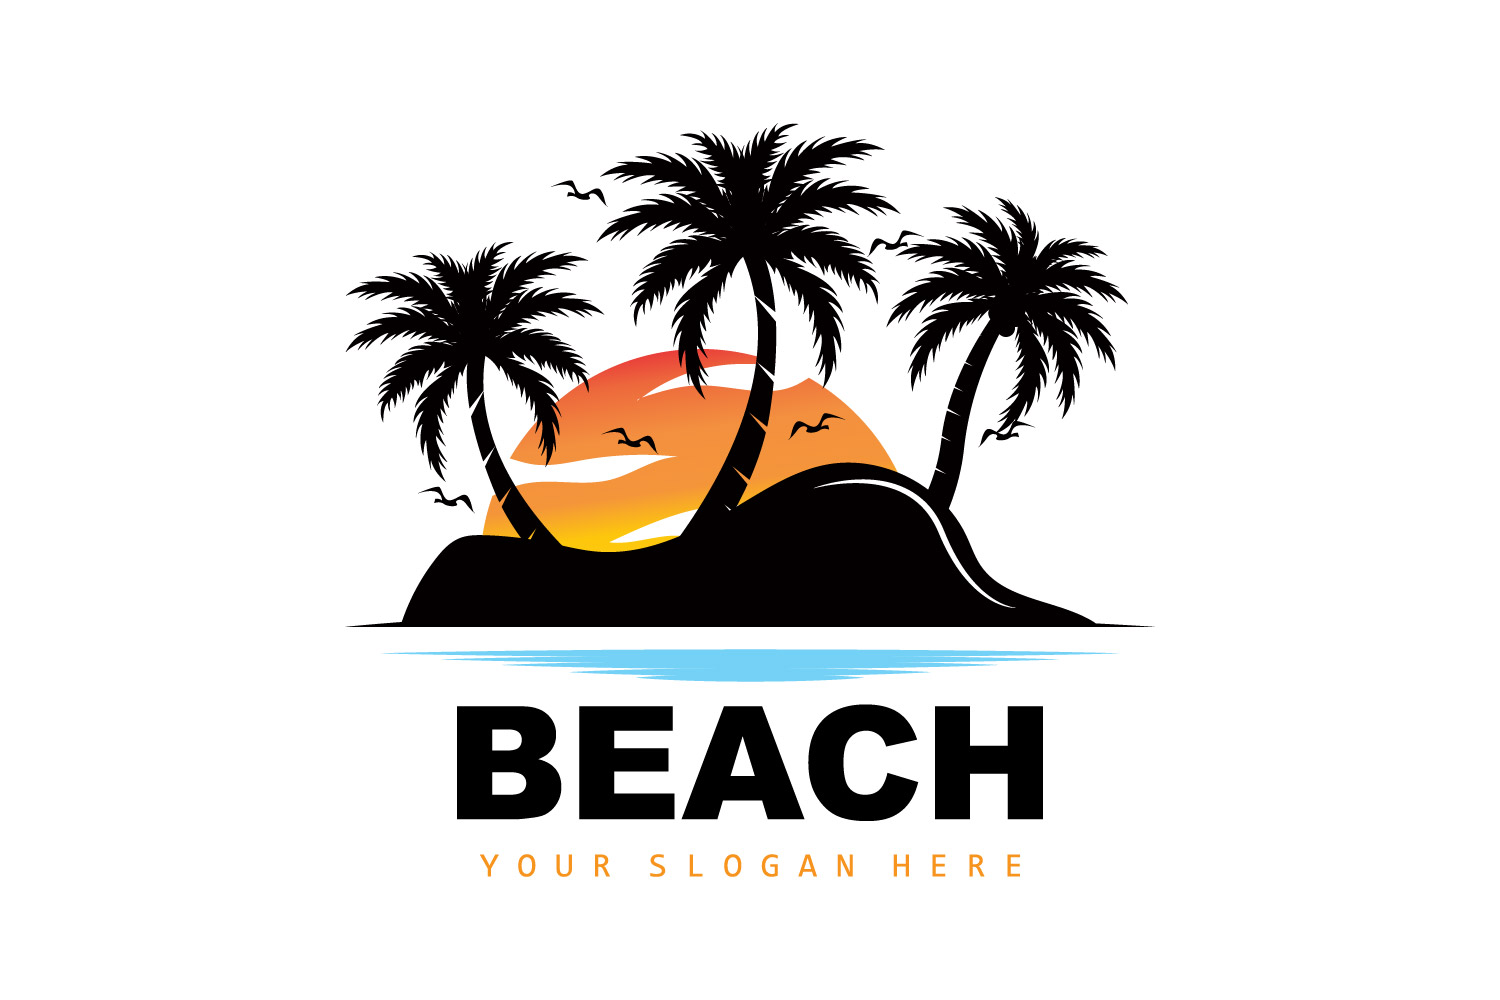 Palm Tree Logo Beach Summer DesignV21